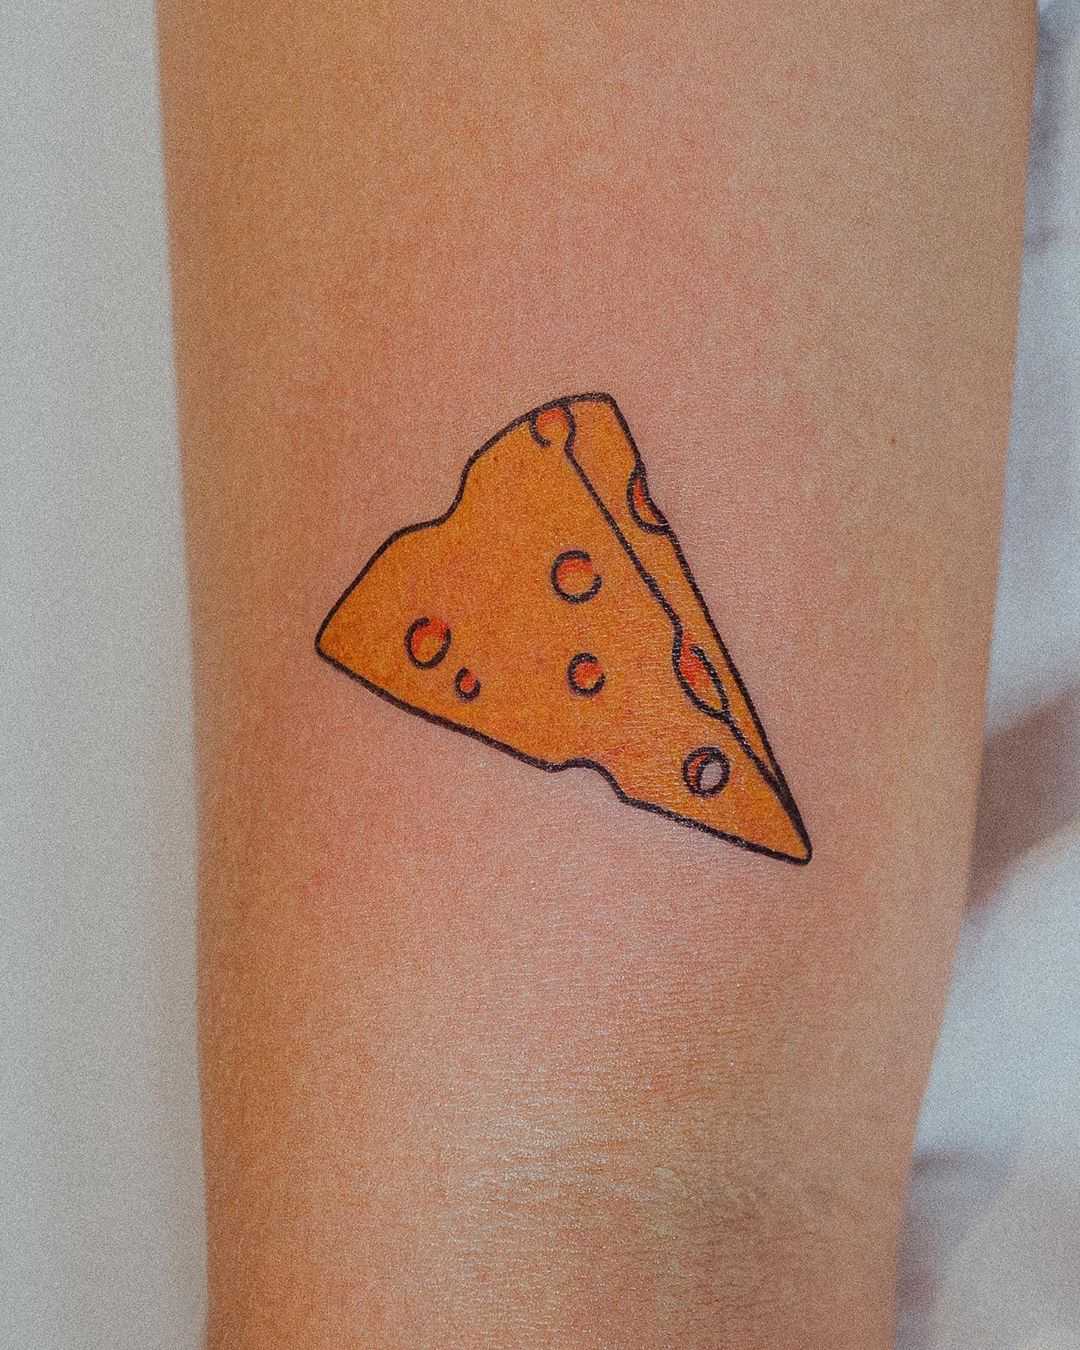 Swiss cheese tattoo by tattooist Bongkee